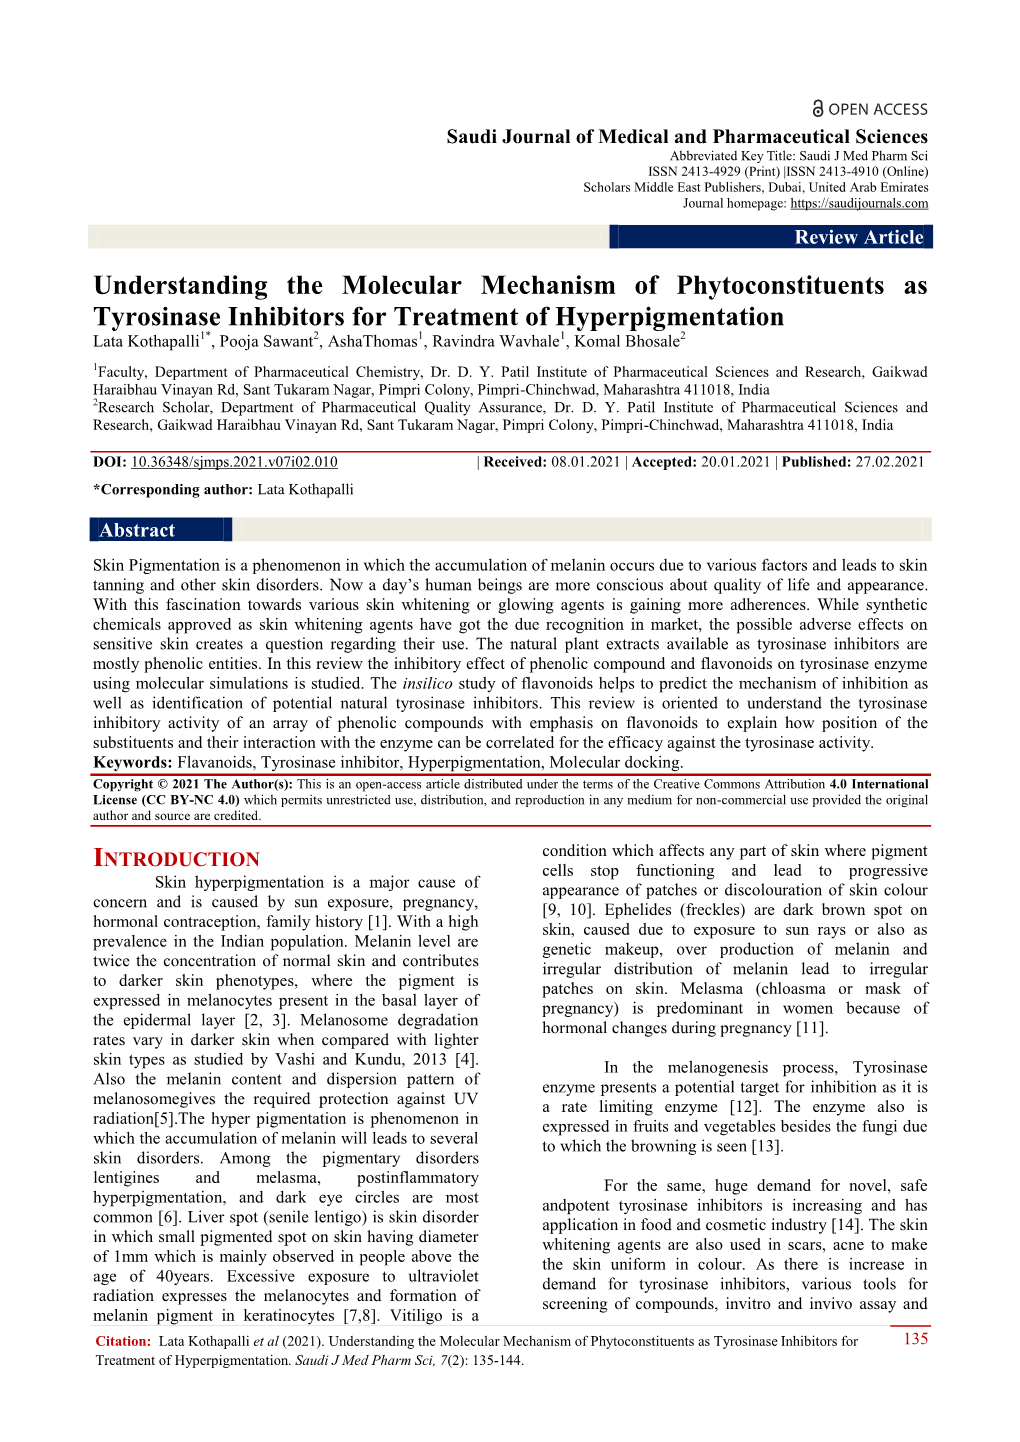 Understanding the Molecular Mechanism of Phytoconstituents As